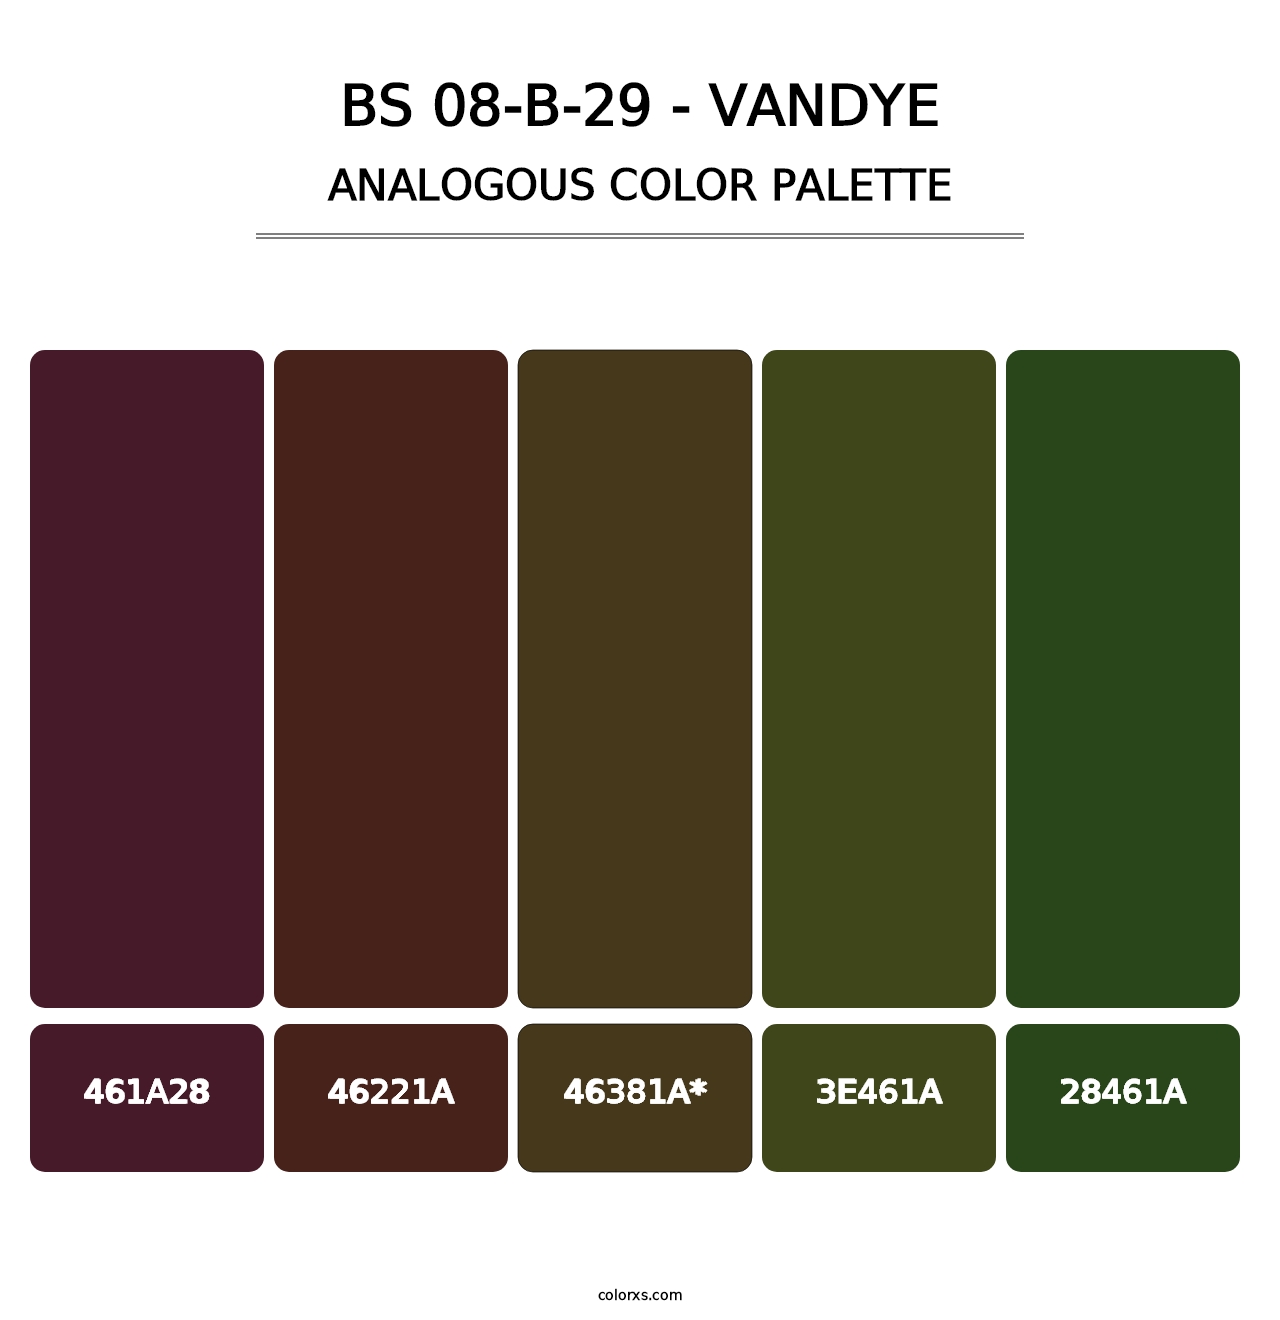 BS 08-B-29 - Vandye - Analogous Color Palette